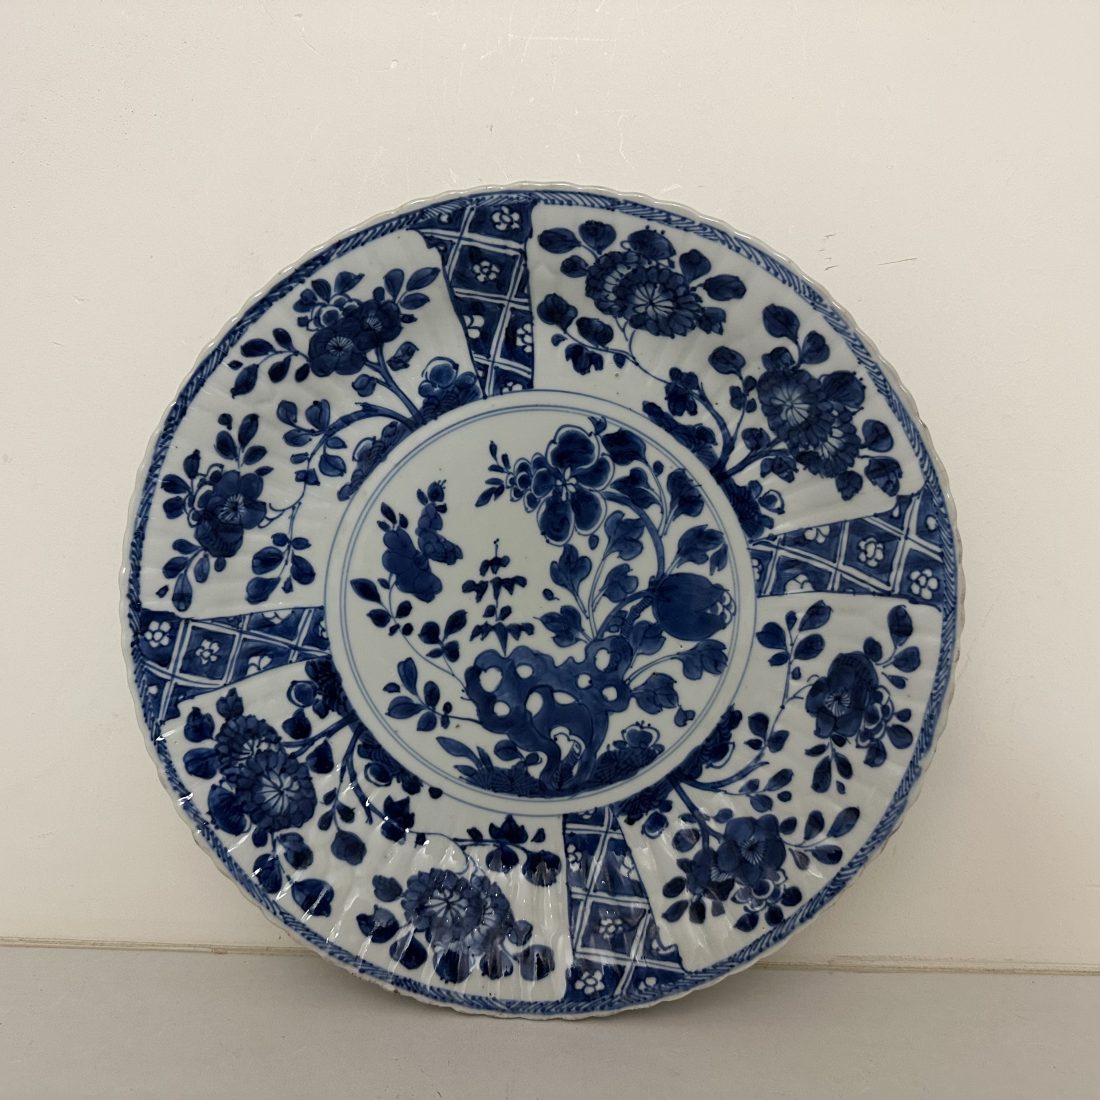 Blauw/wit gegolfd Kangxi bord, China, 17e eeuw